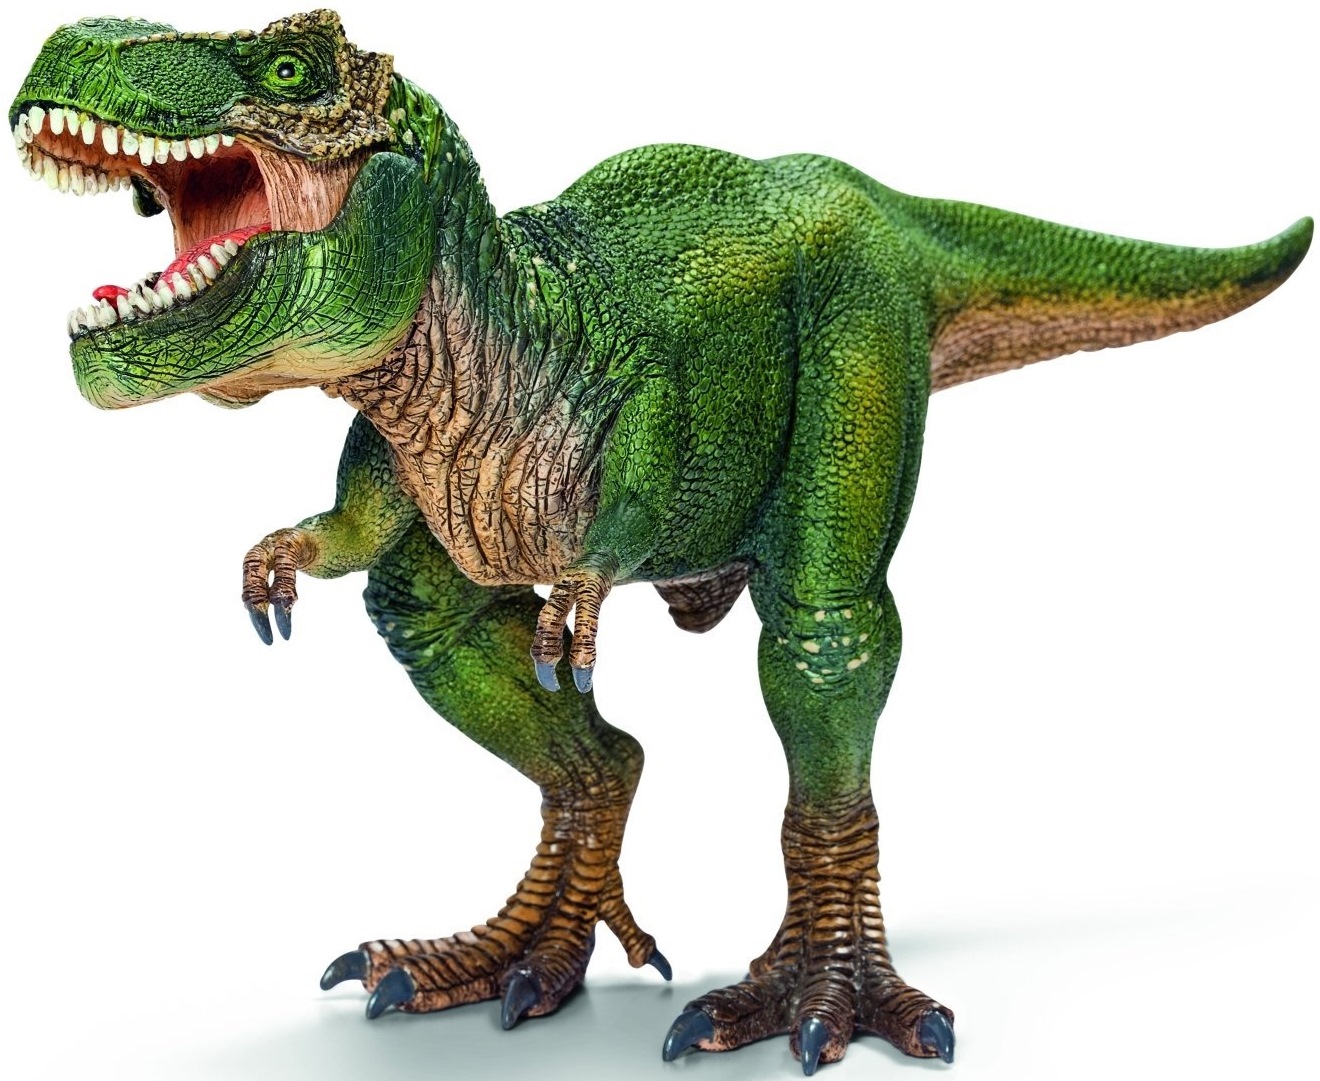 Фигурка Schleich Тираннозавр 14587